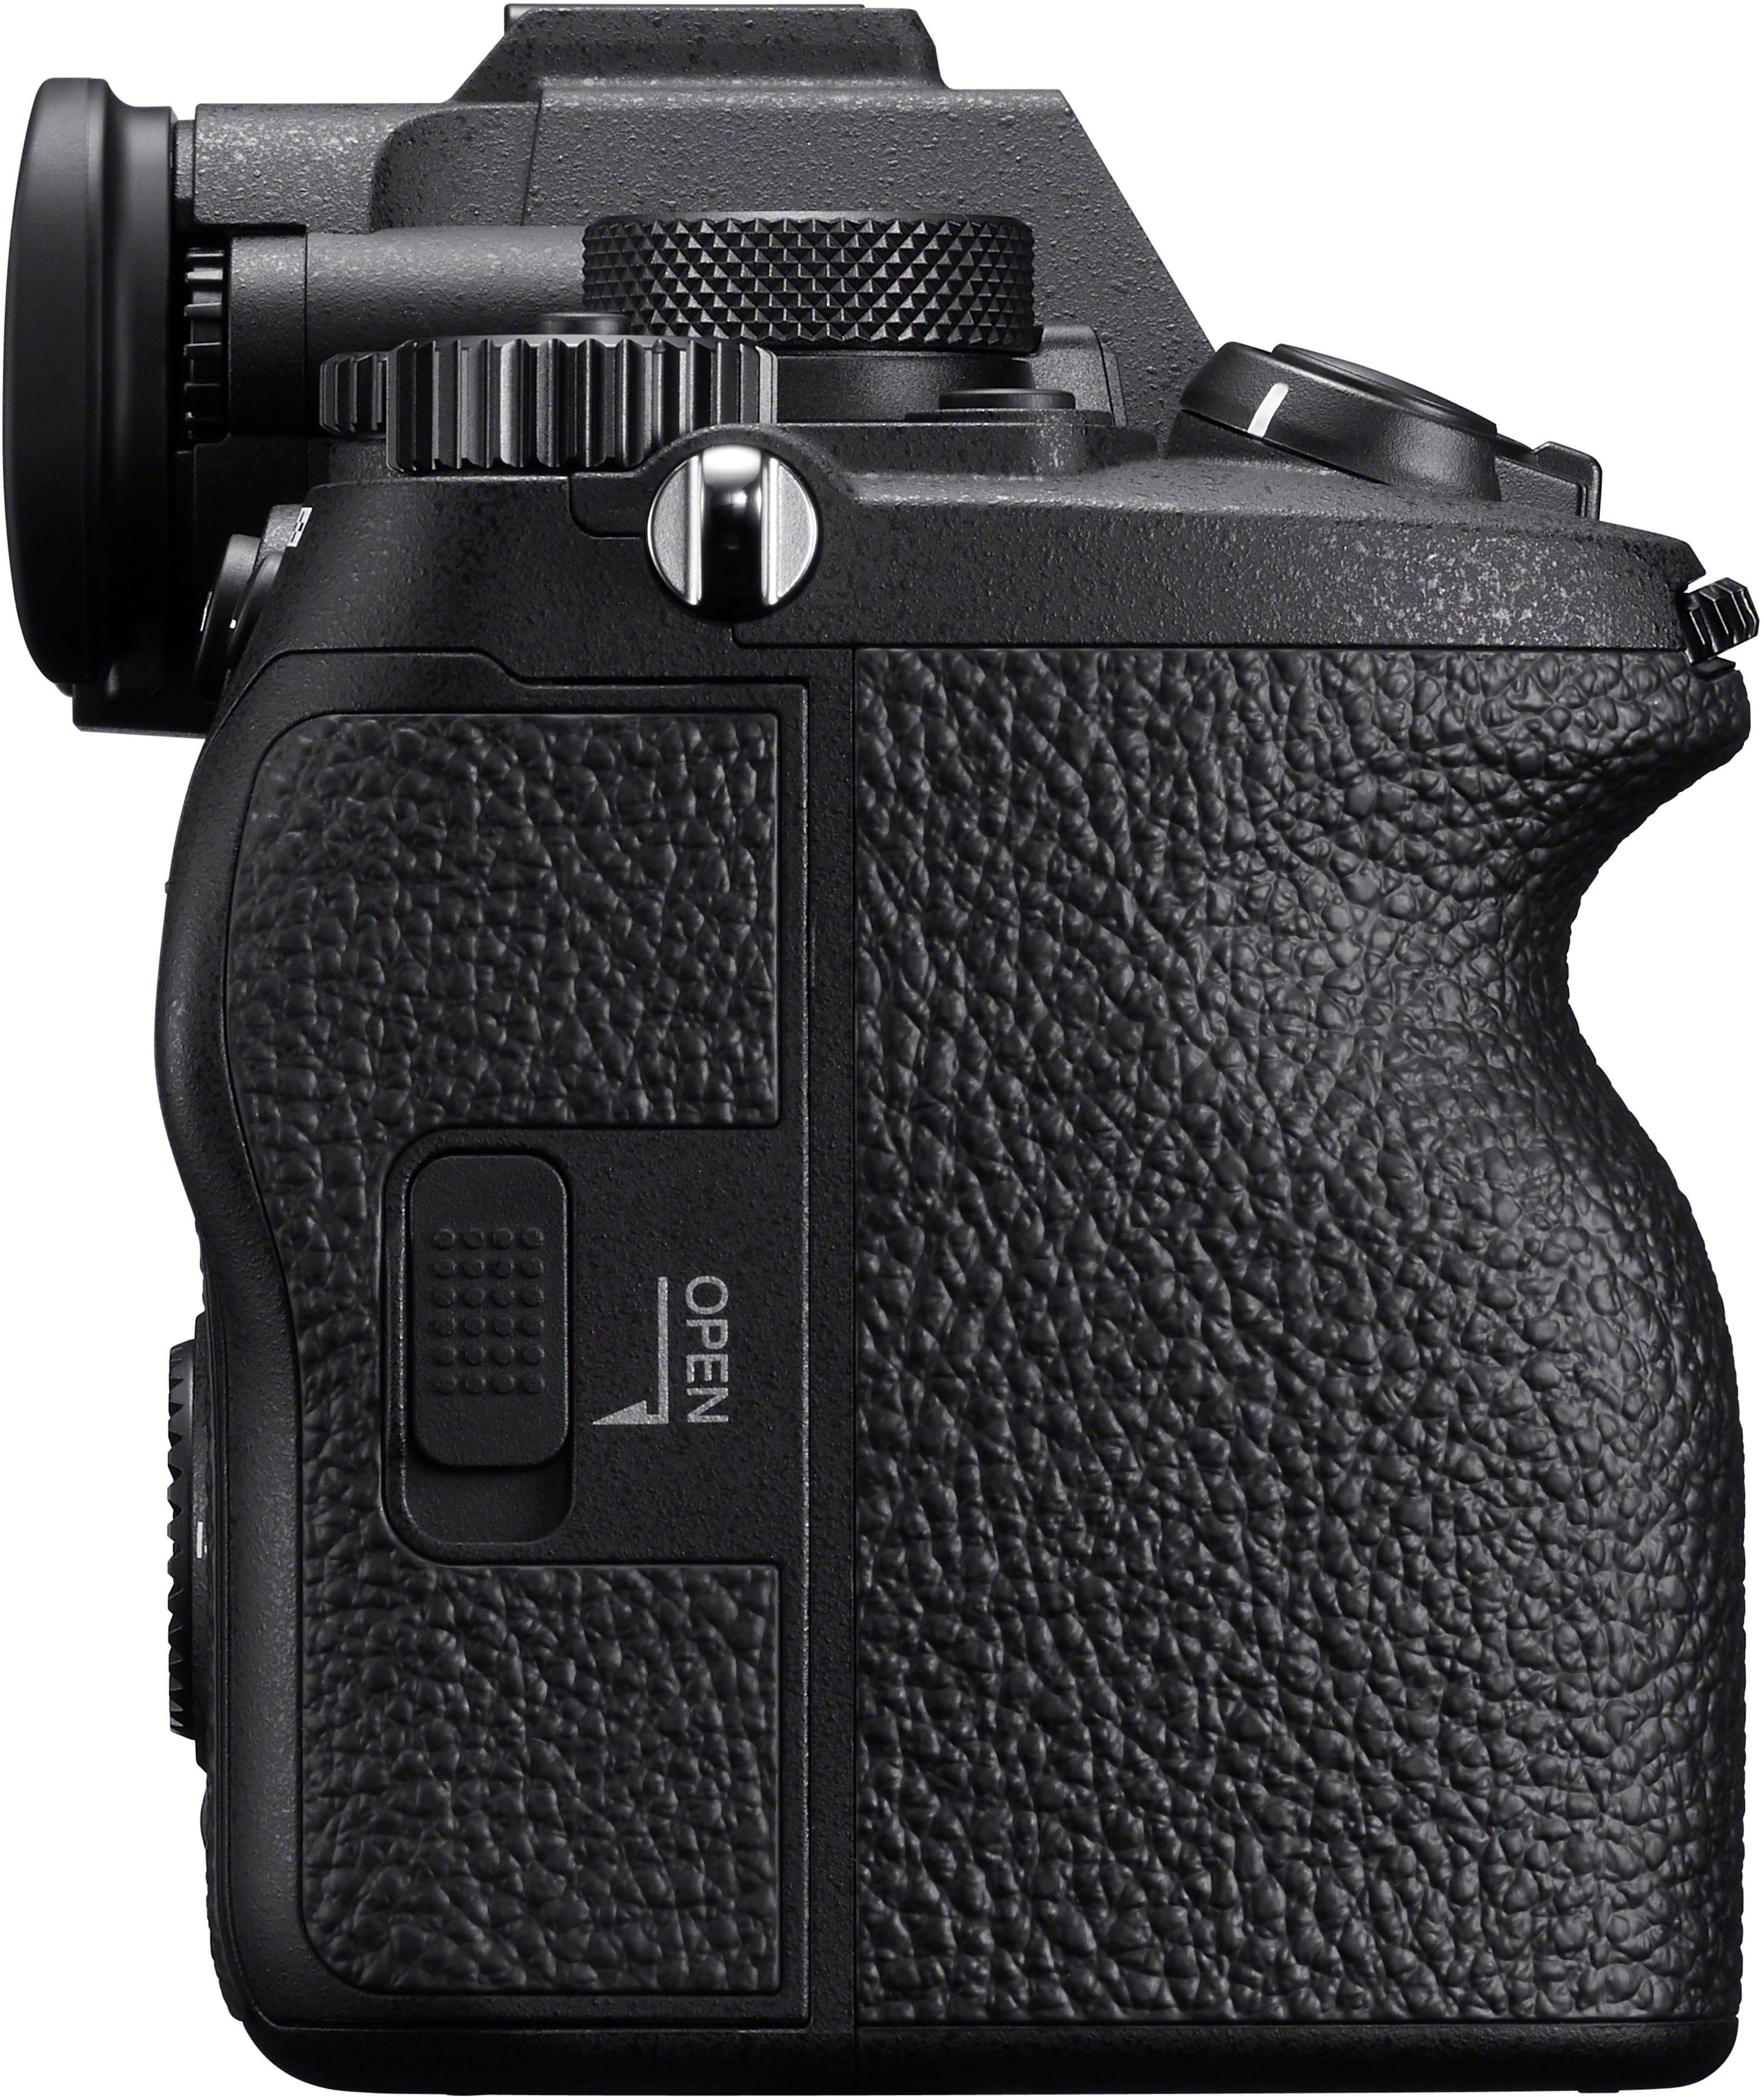 Reflex Camera Sony ILCE-7M4